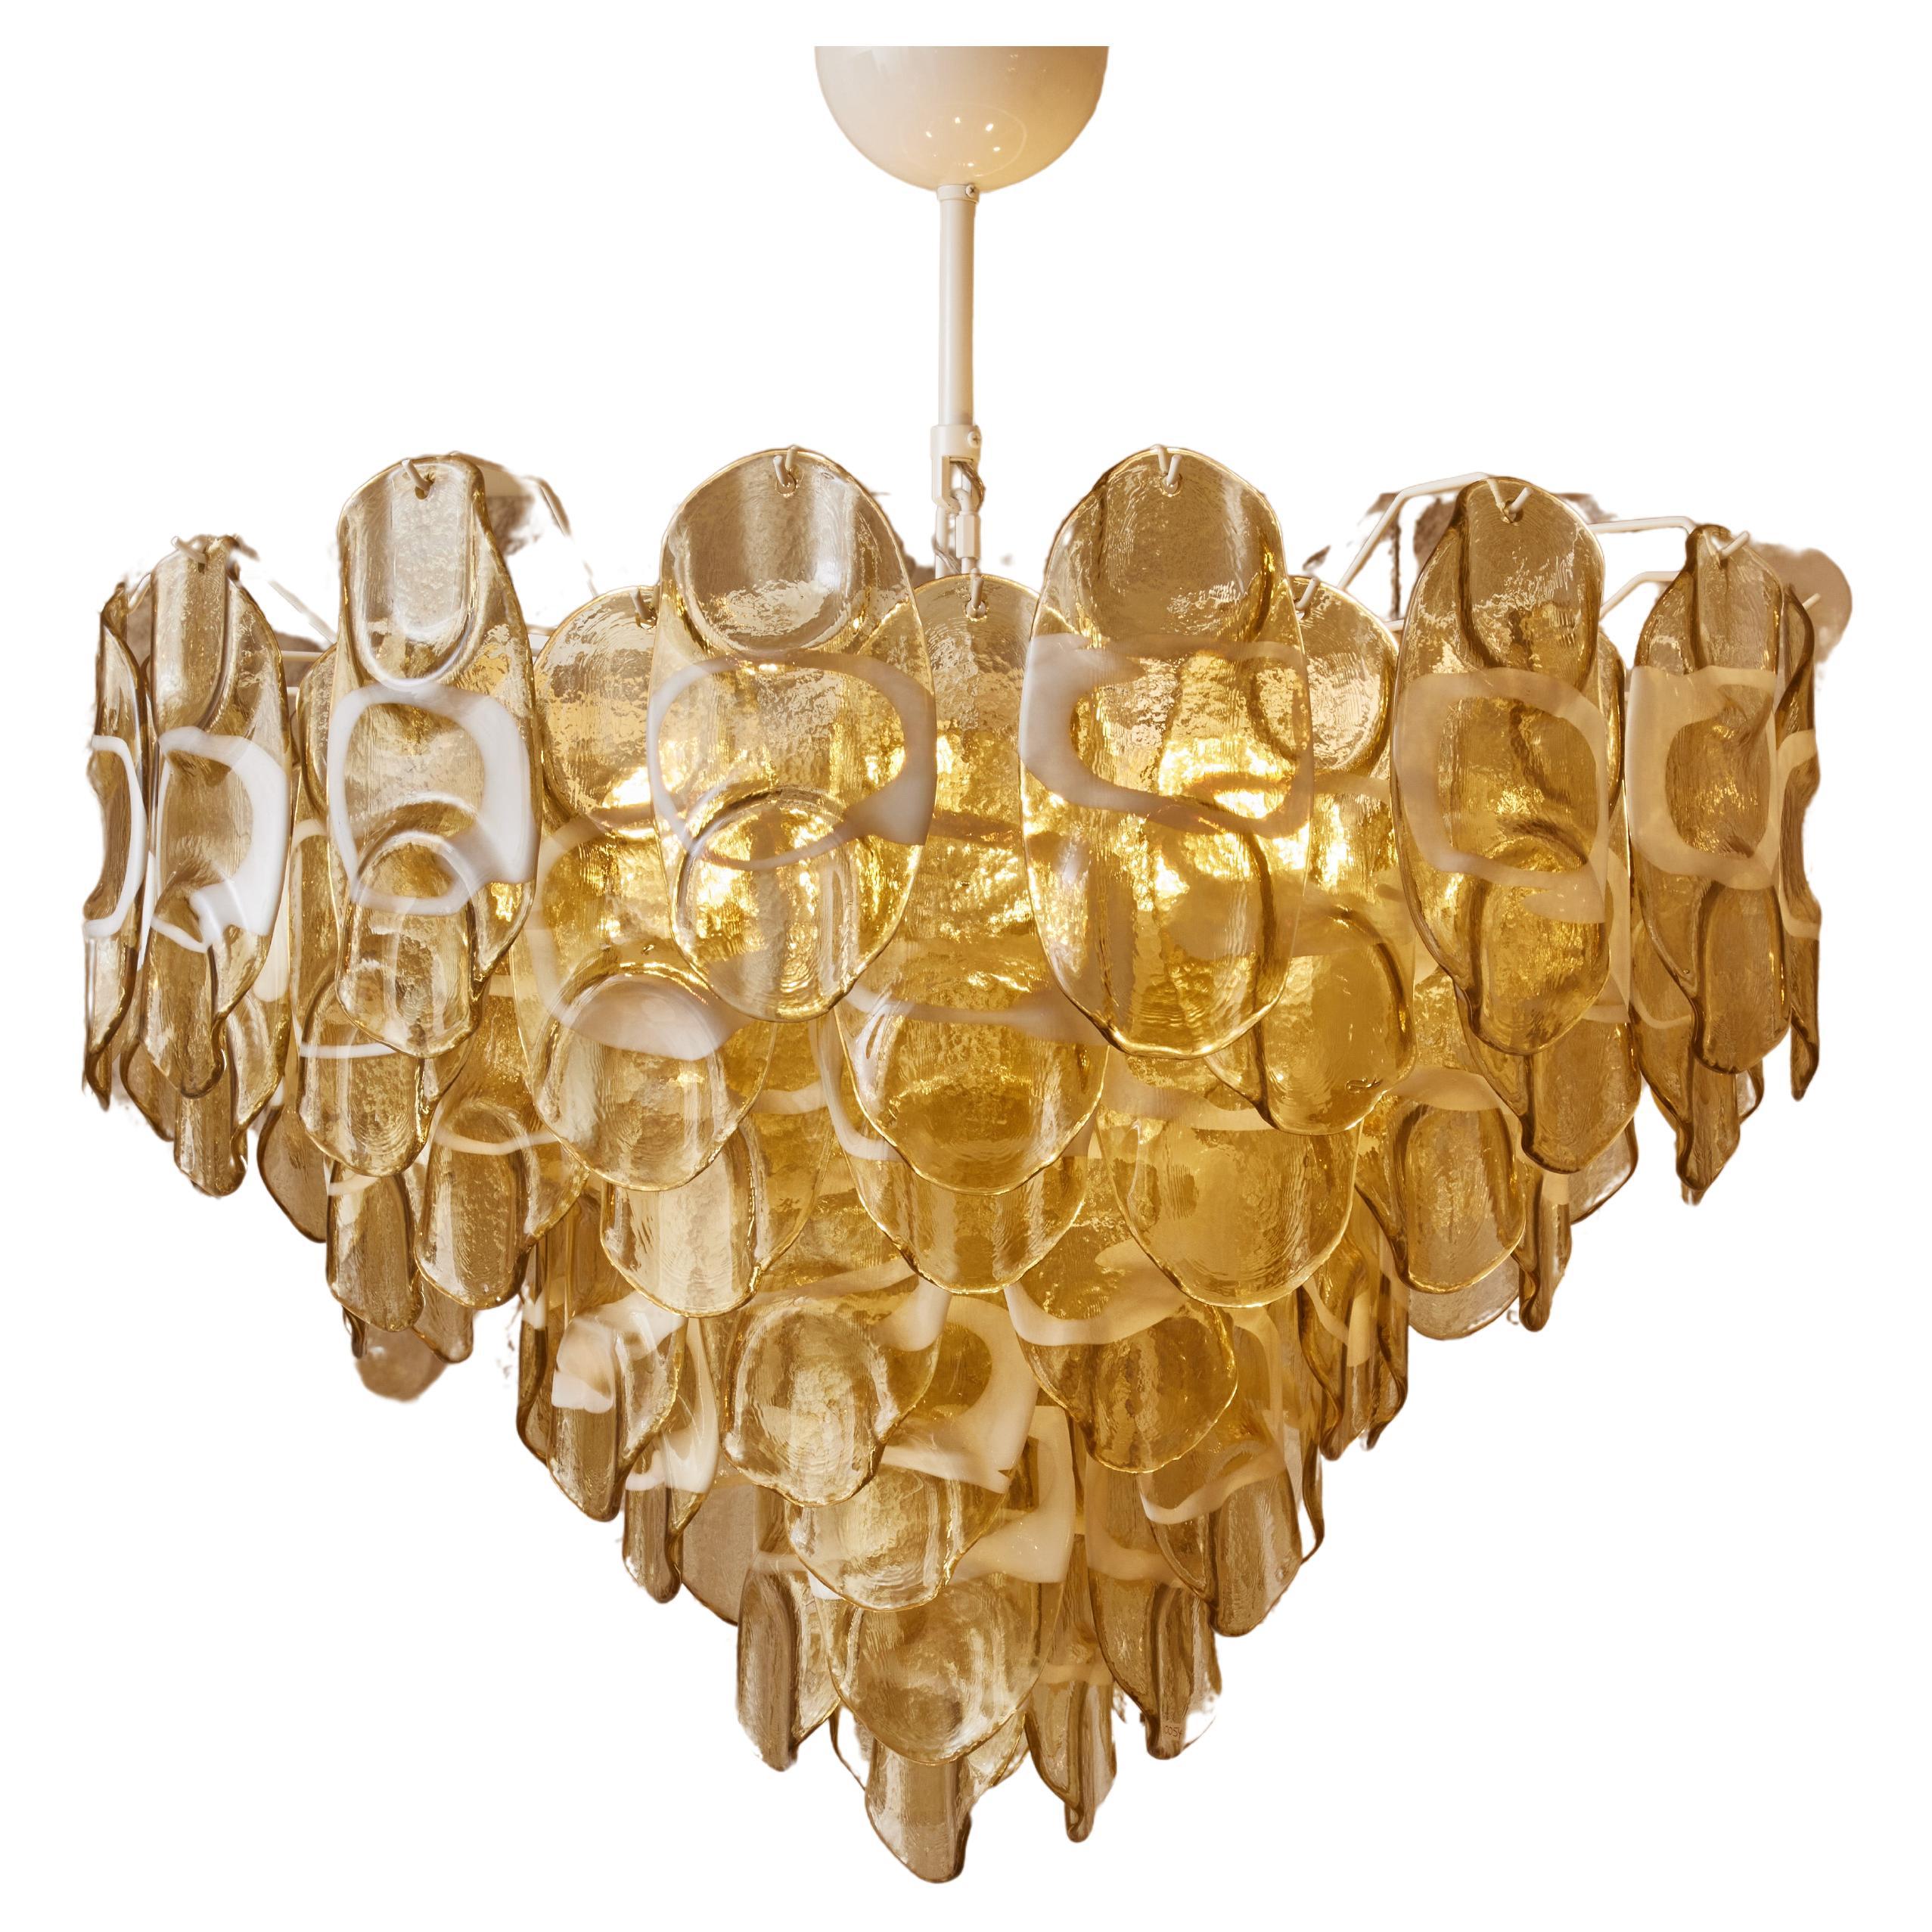 Murano glass chandelier by Studio Glustin